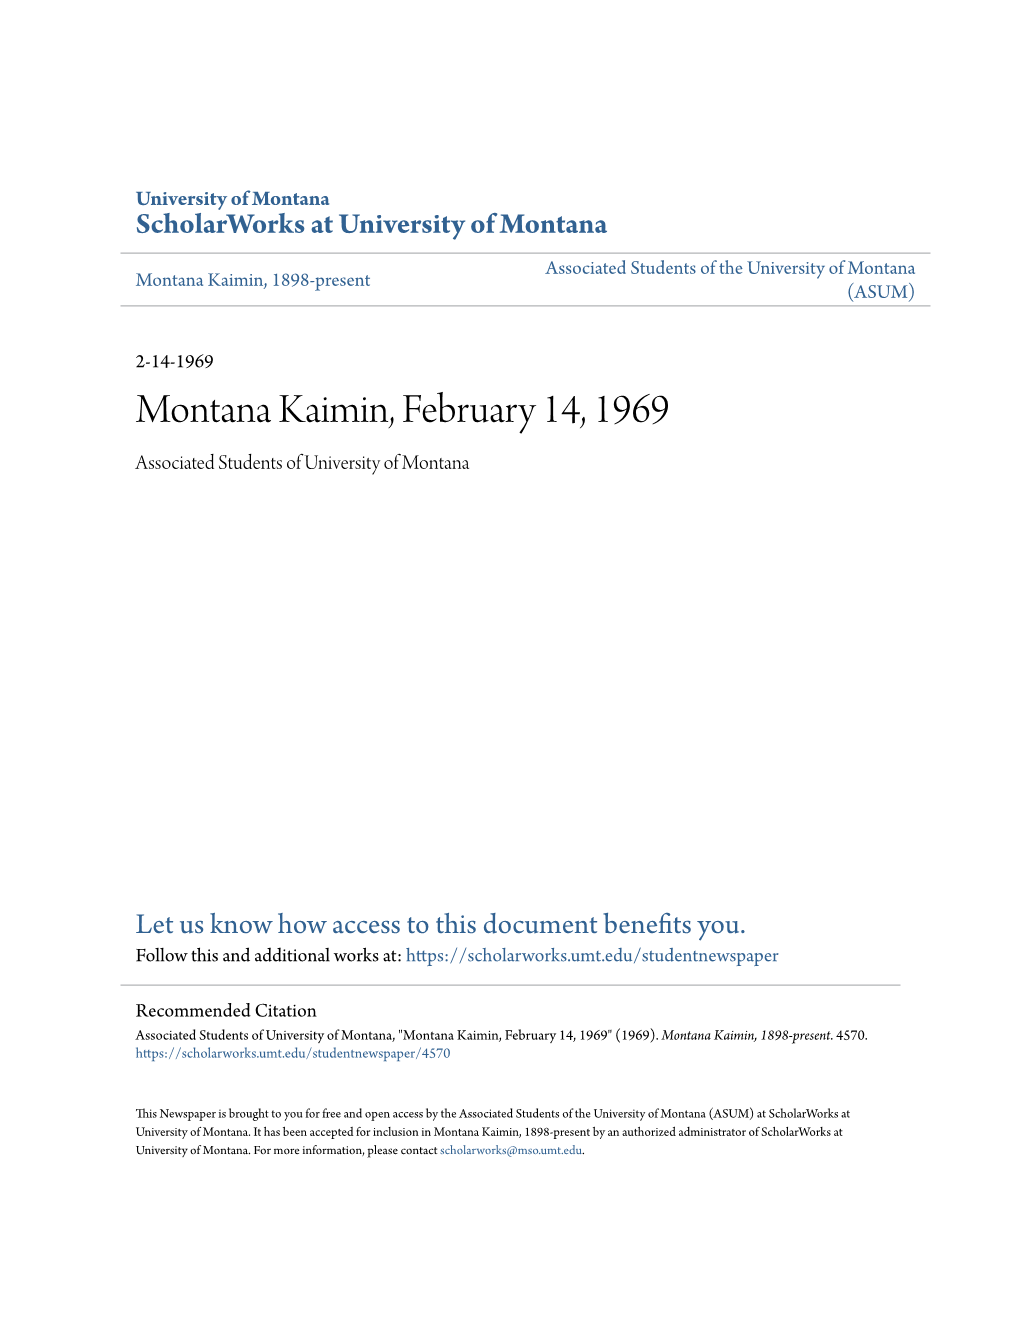 Montana Kaimin, February 14, 1969 Associated Students of University of Montana